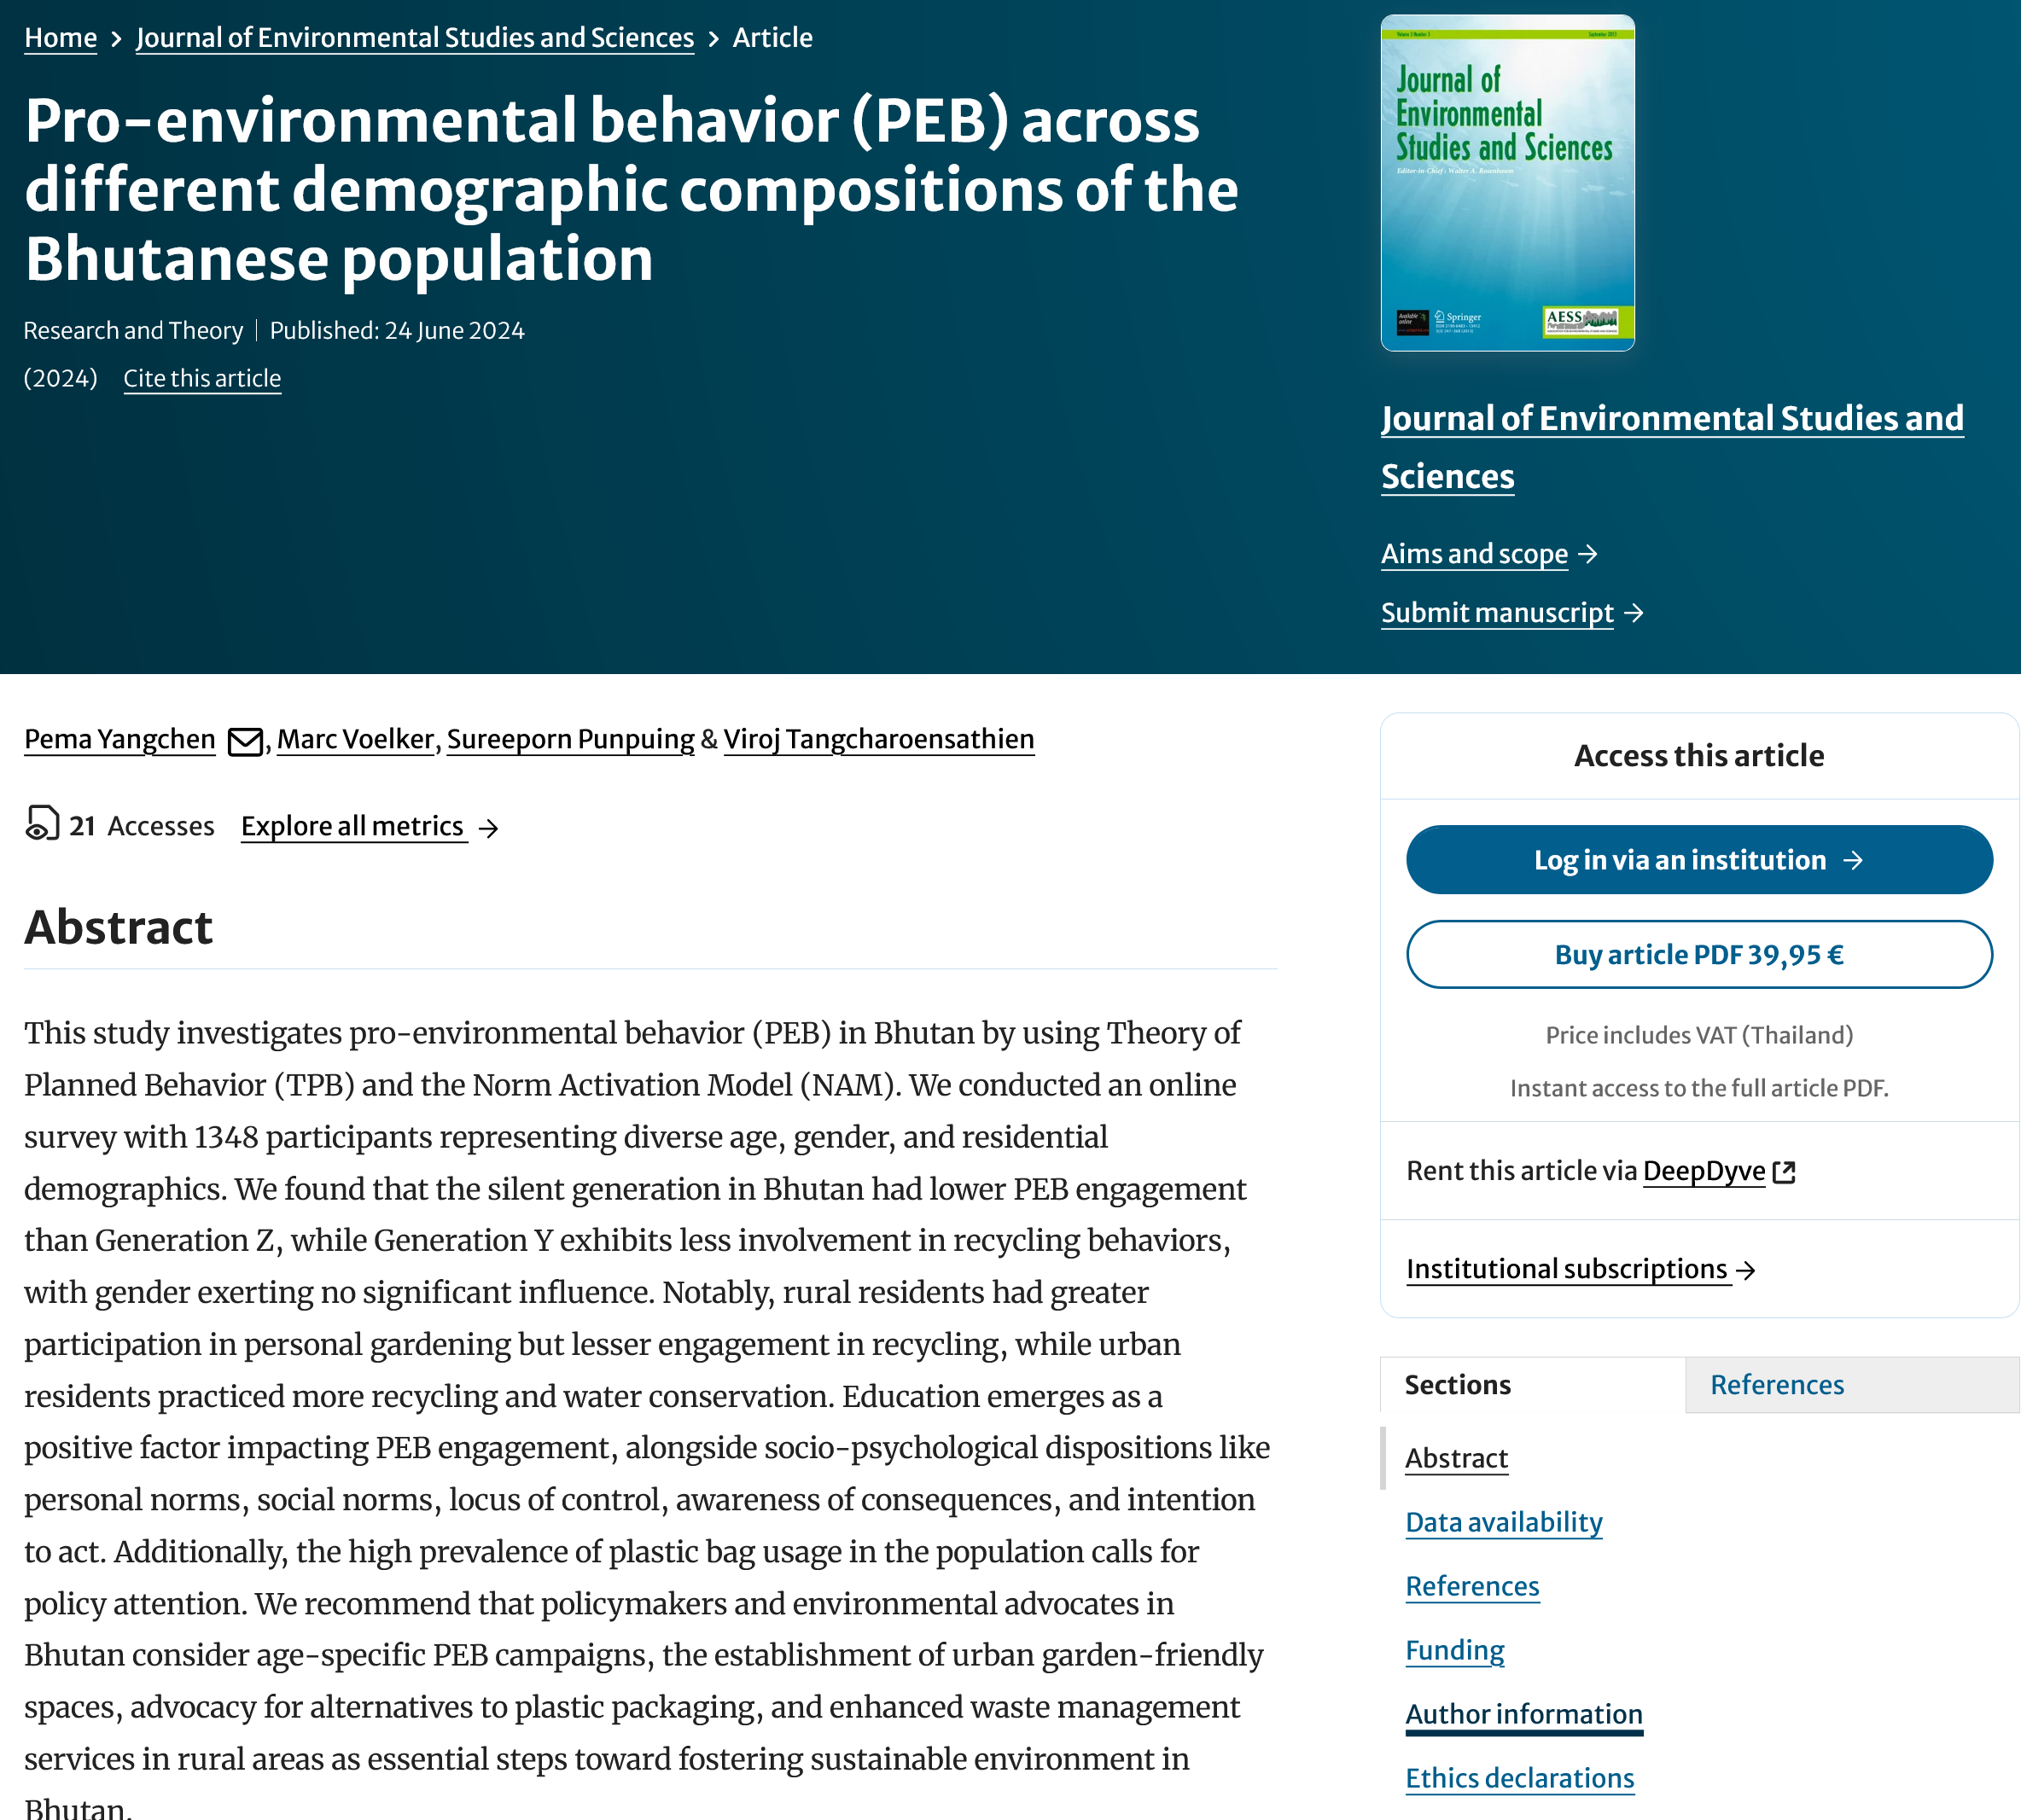 Pro-environmental behavior (PEB) across different demographic compositions of the Bhutanese population